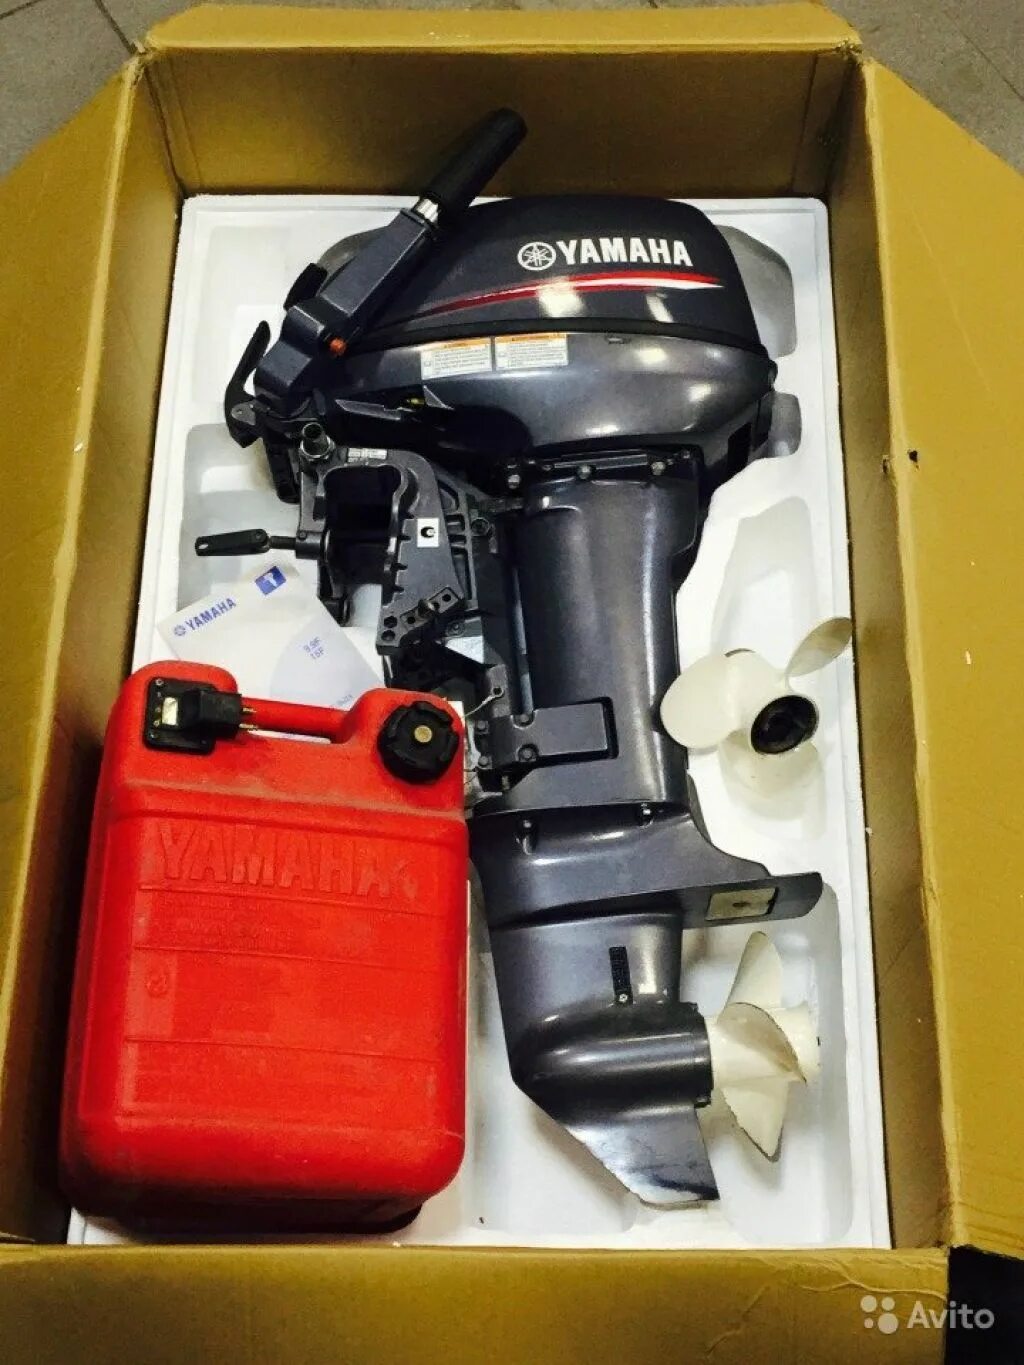 Yamaha 9.9. Мотор Yamaha 9.9. Yamaha 9.9 GMHS. Ямаха 9.9 4-х. Ямаха 9.9 масло